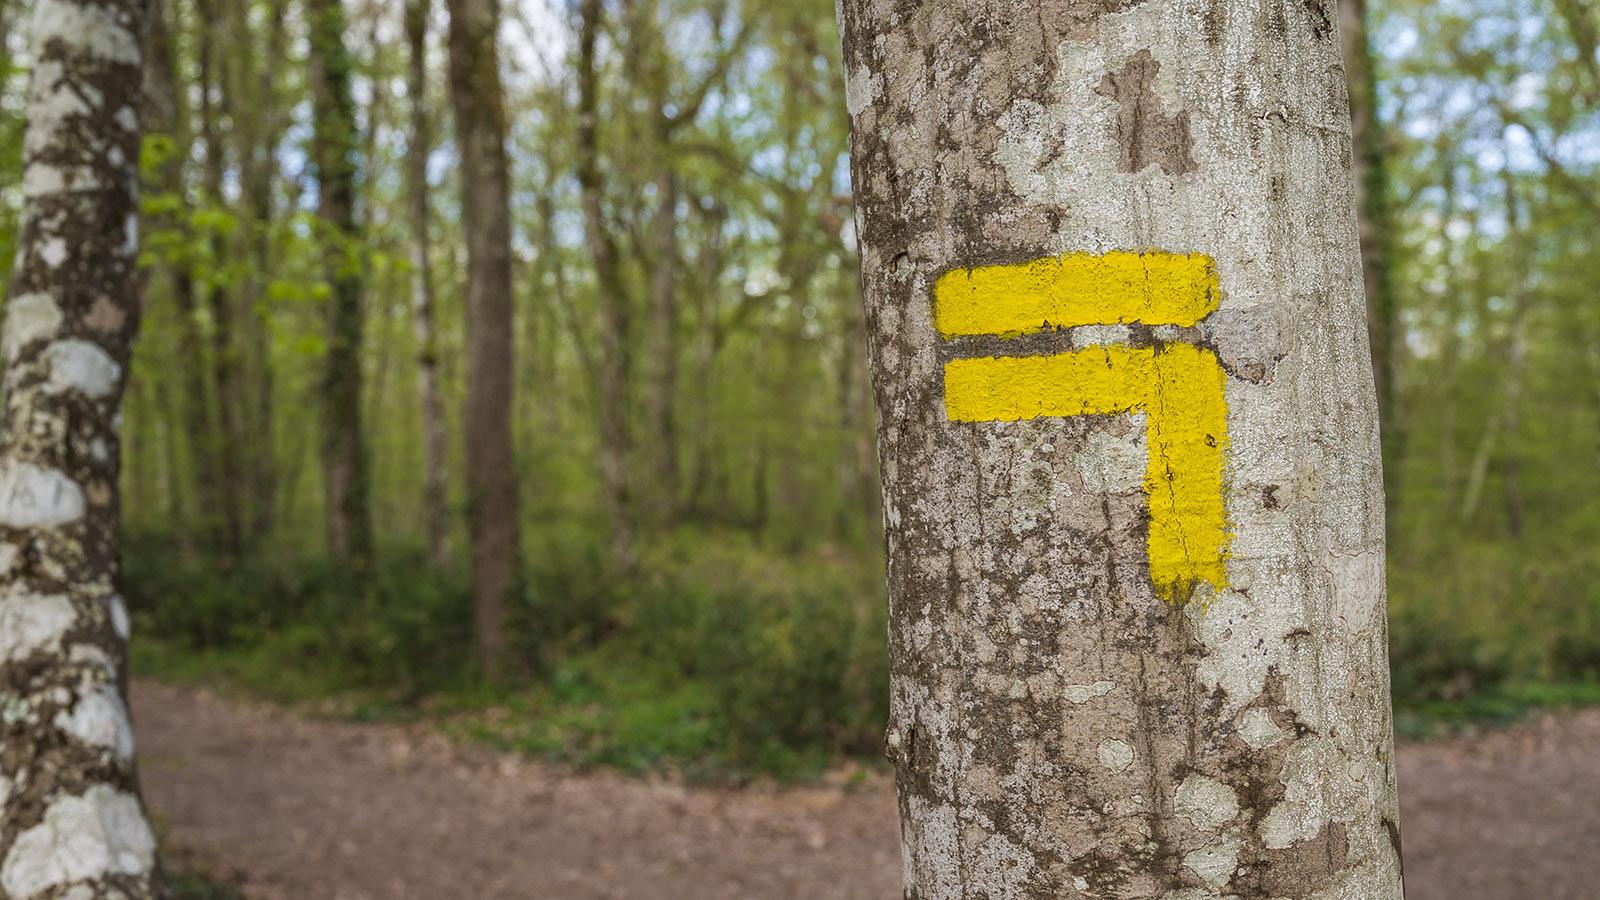 Lokale Wanderwege sind in Frankreich gelb markiert, Fernwanderwege rot-weiß. Foto: Hilke Maunder